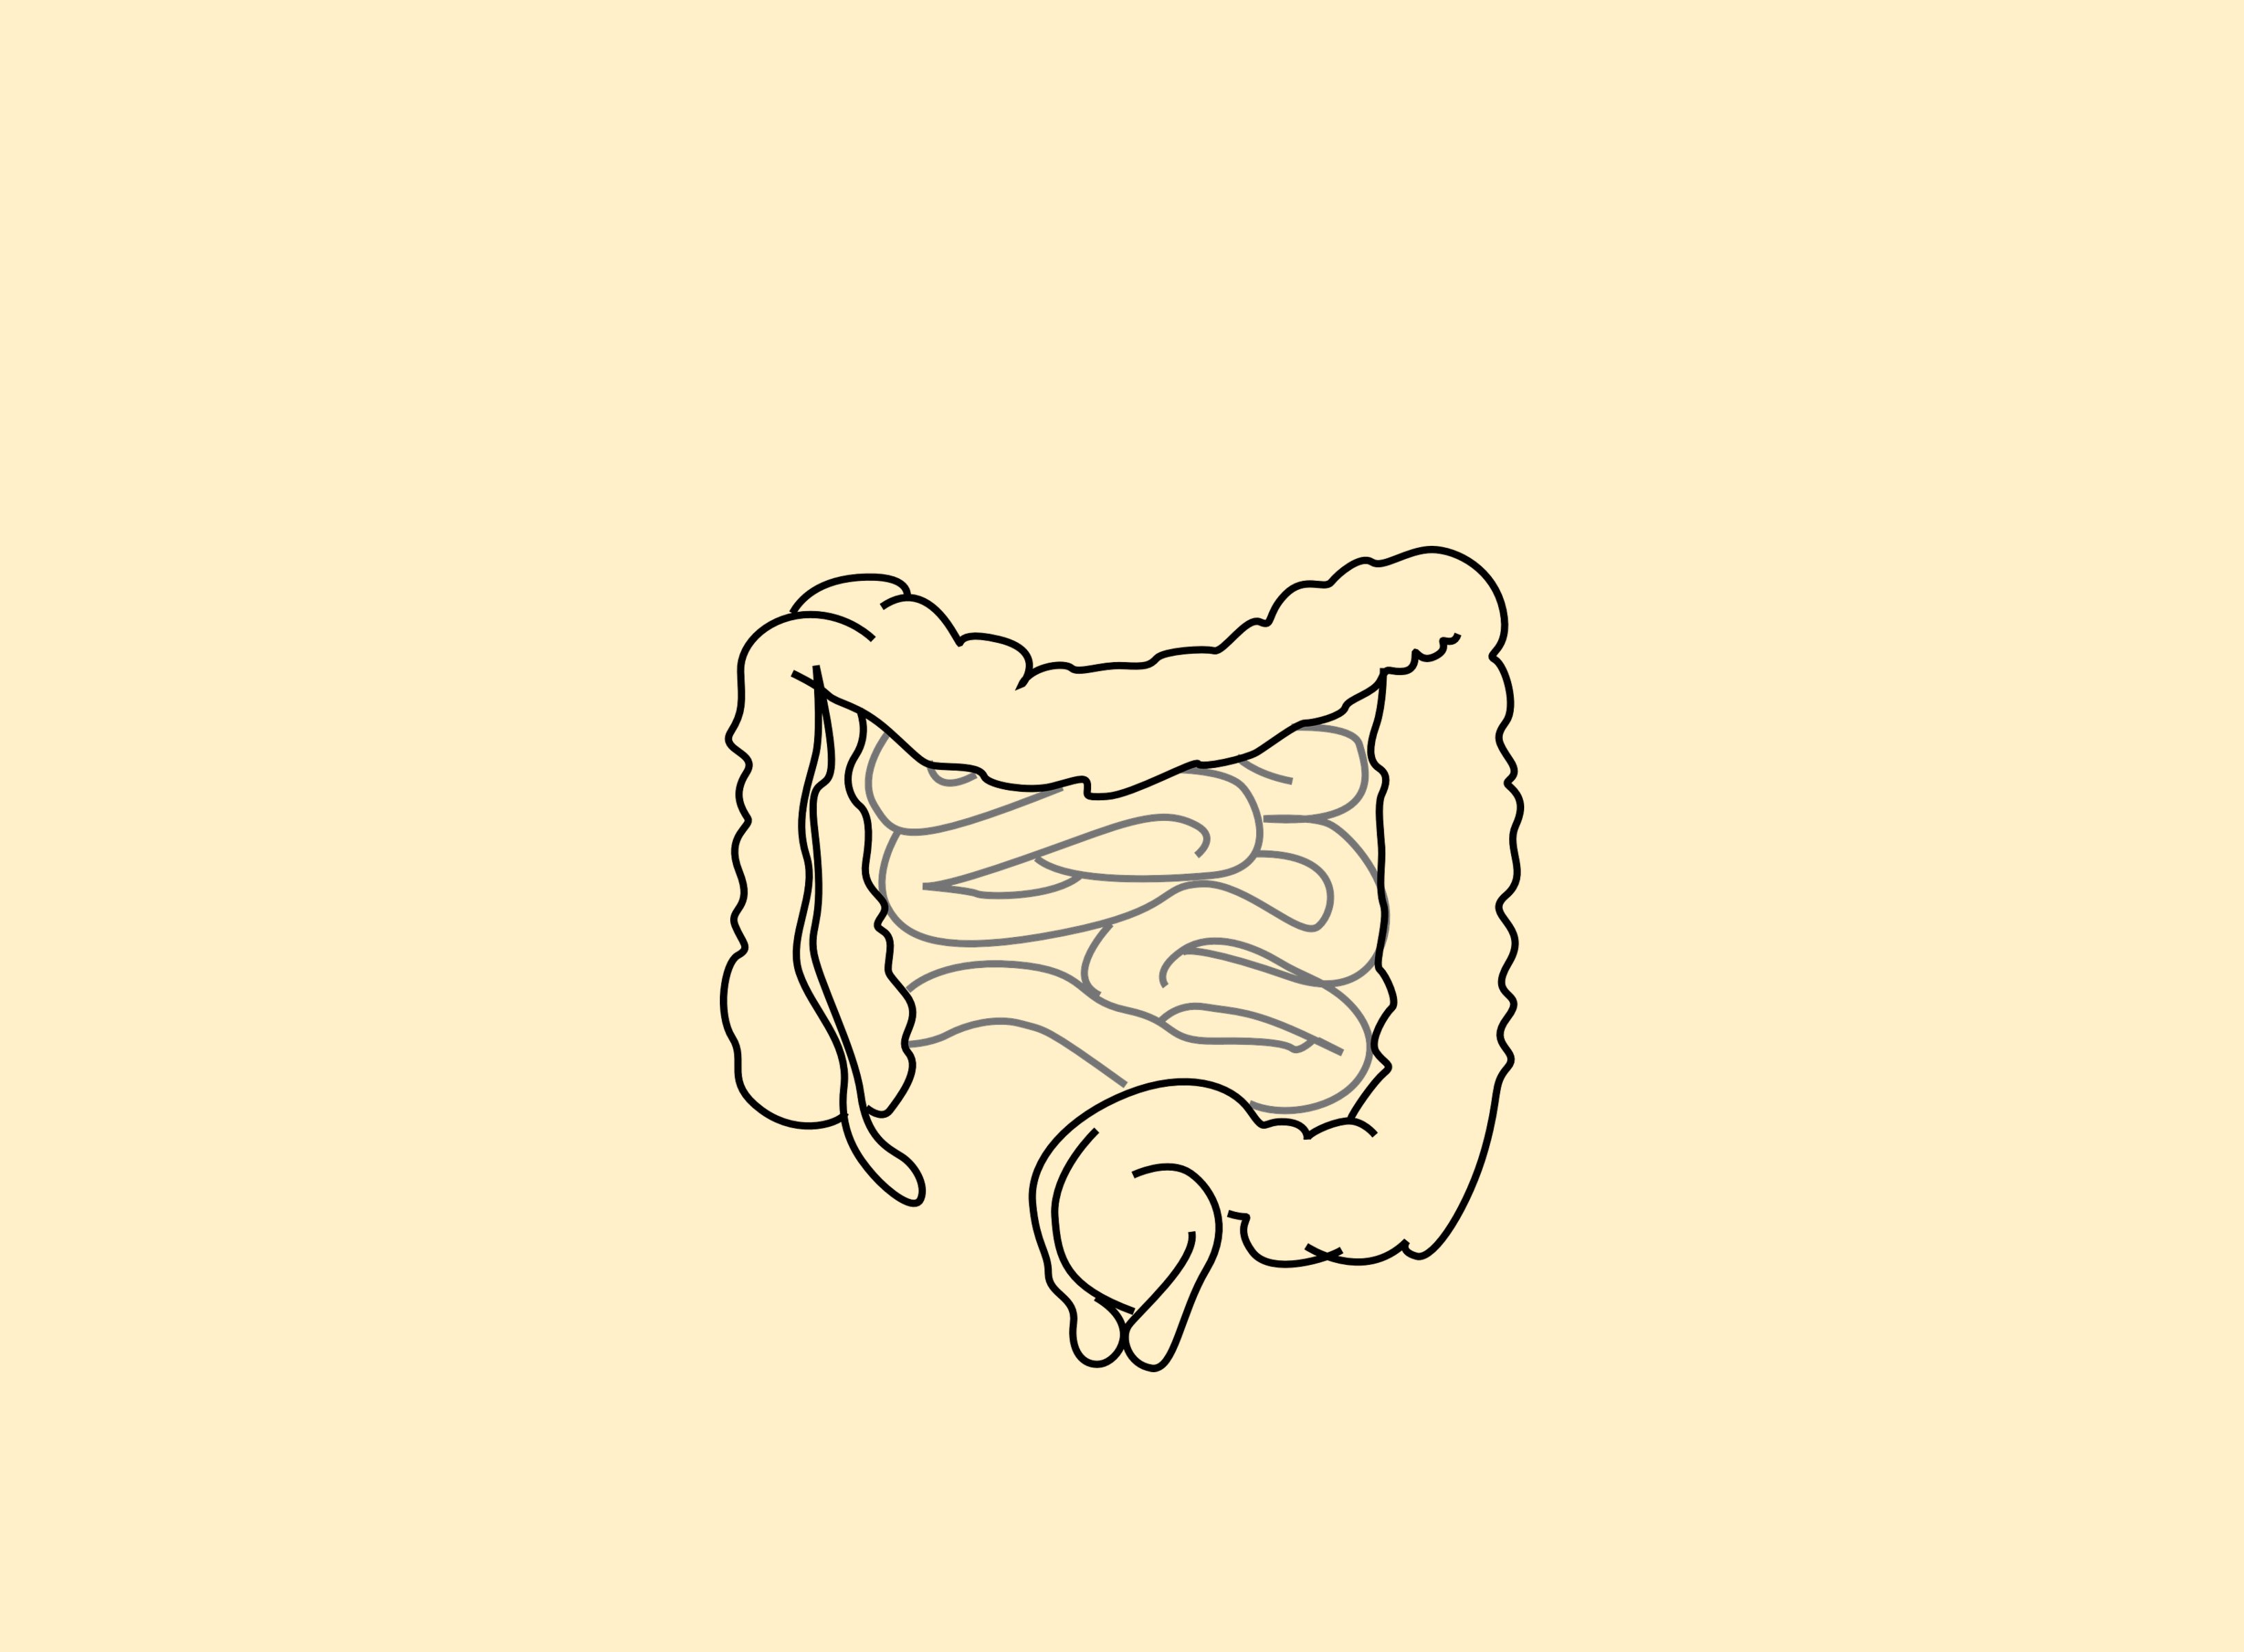 Intestins